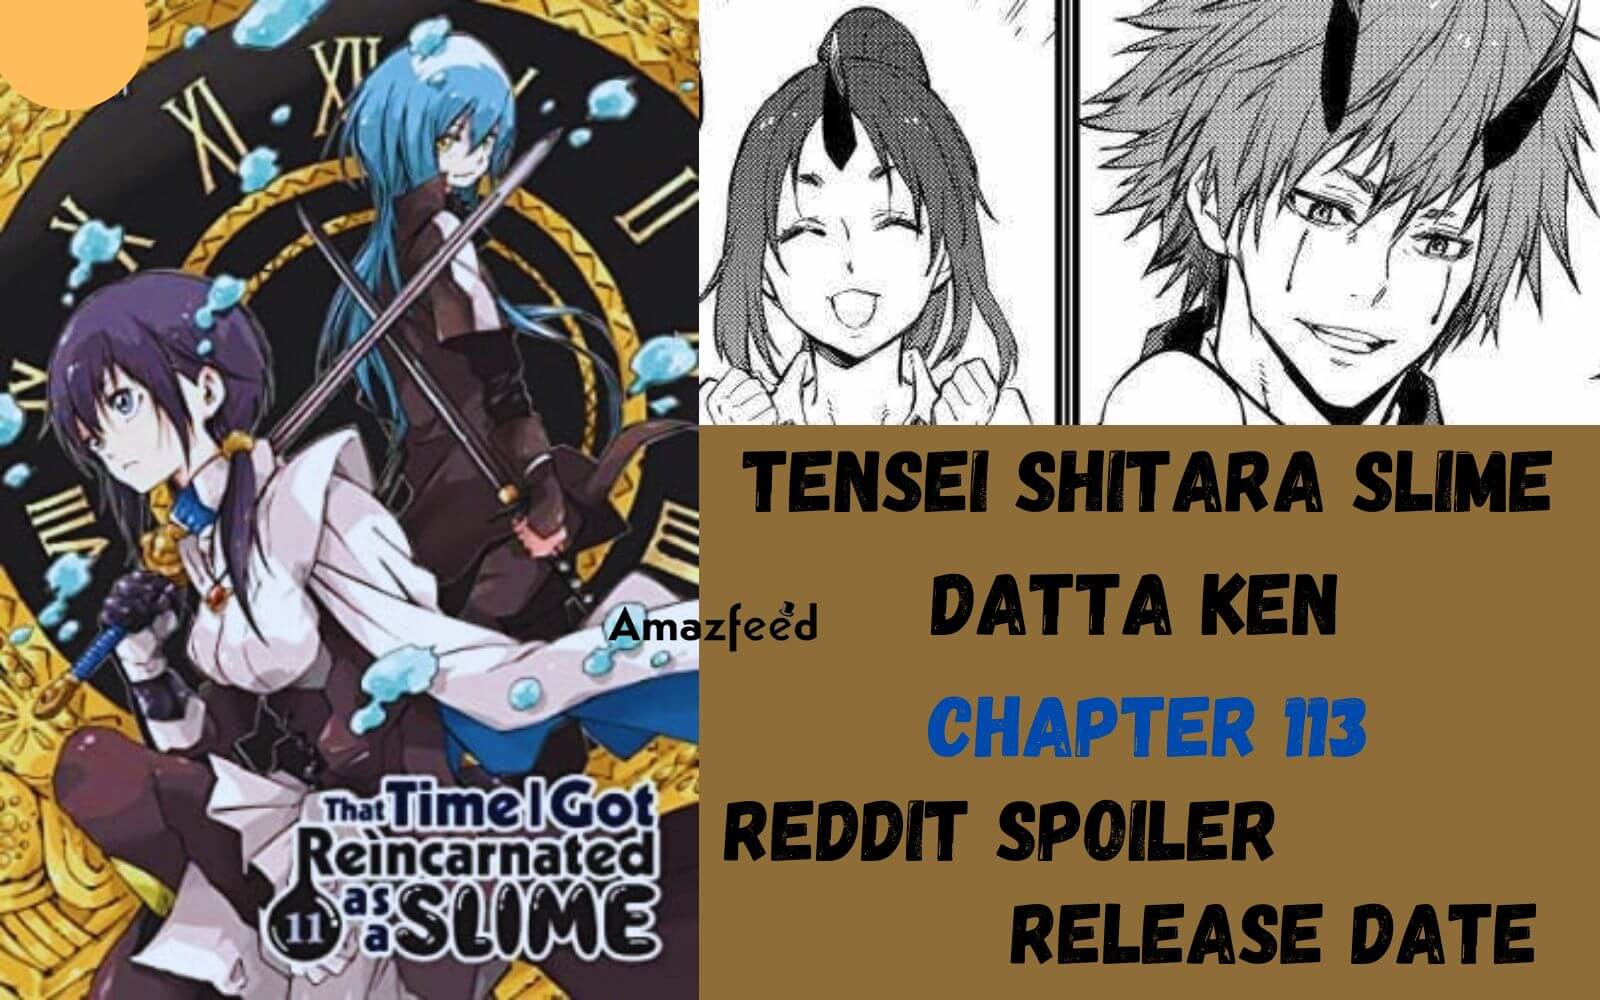 TIPS-ANIME: El anime ''Tensei Shitara Slime Datta Ken 2'', estrena